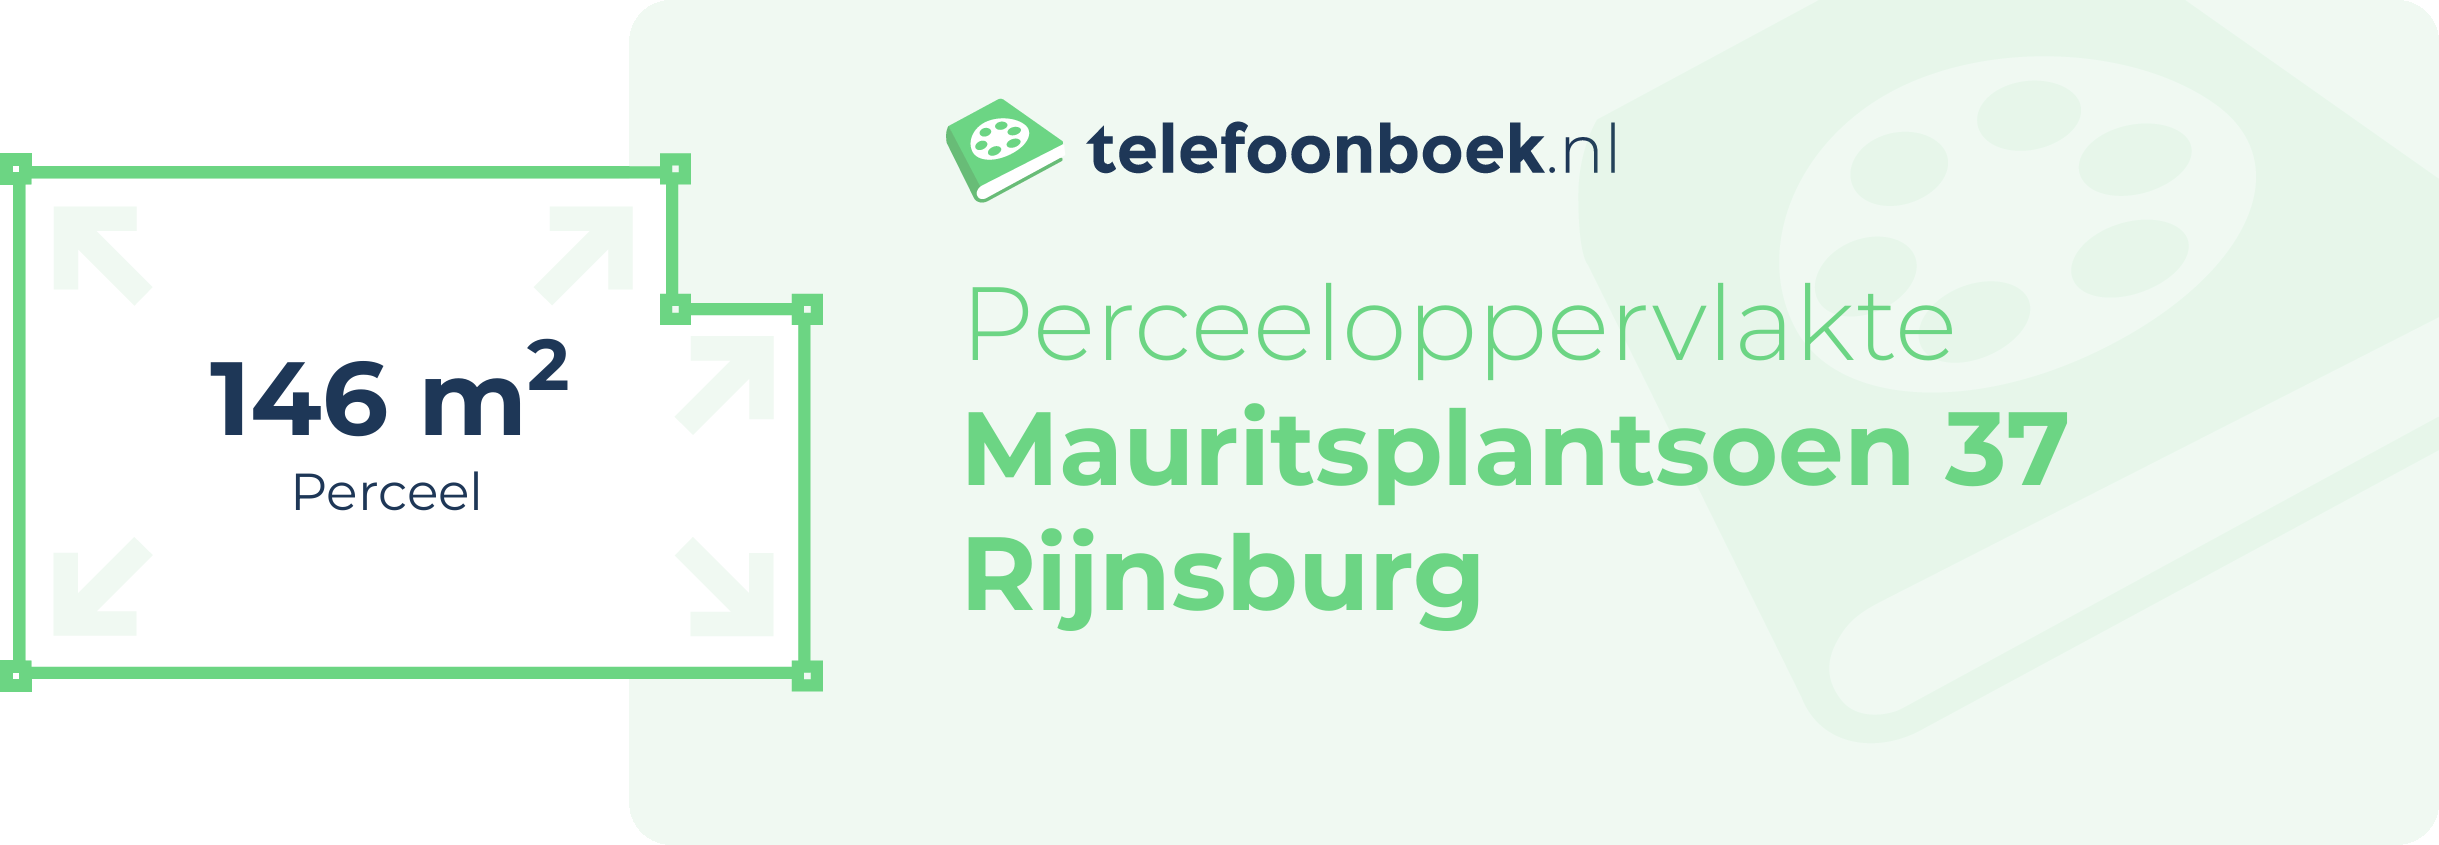 Perceeloppervlakte Mauritsplantsoen 37 Rijnsburg